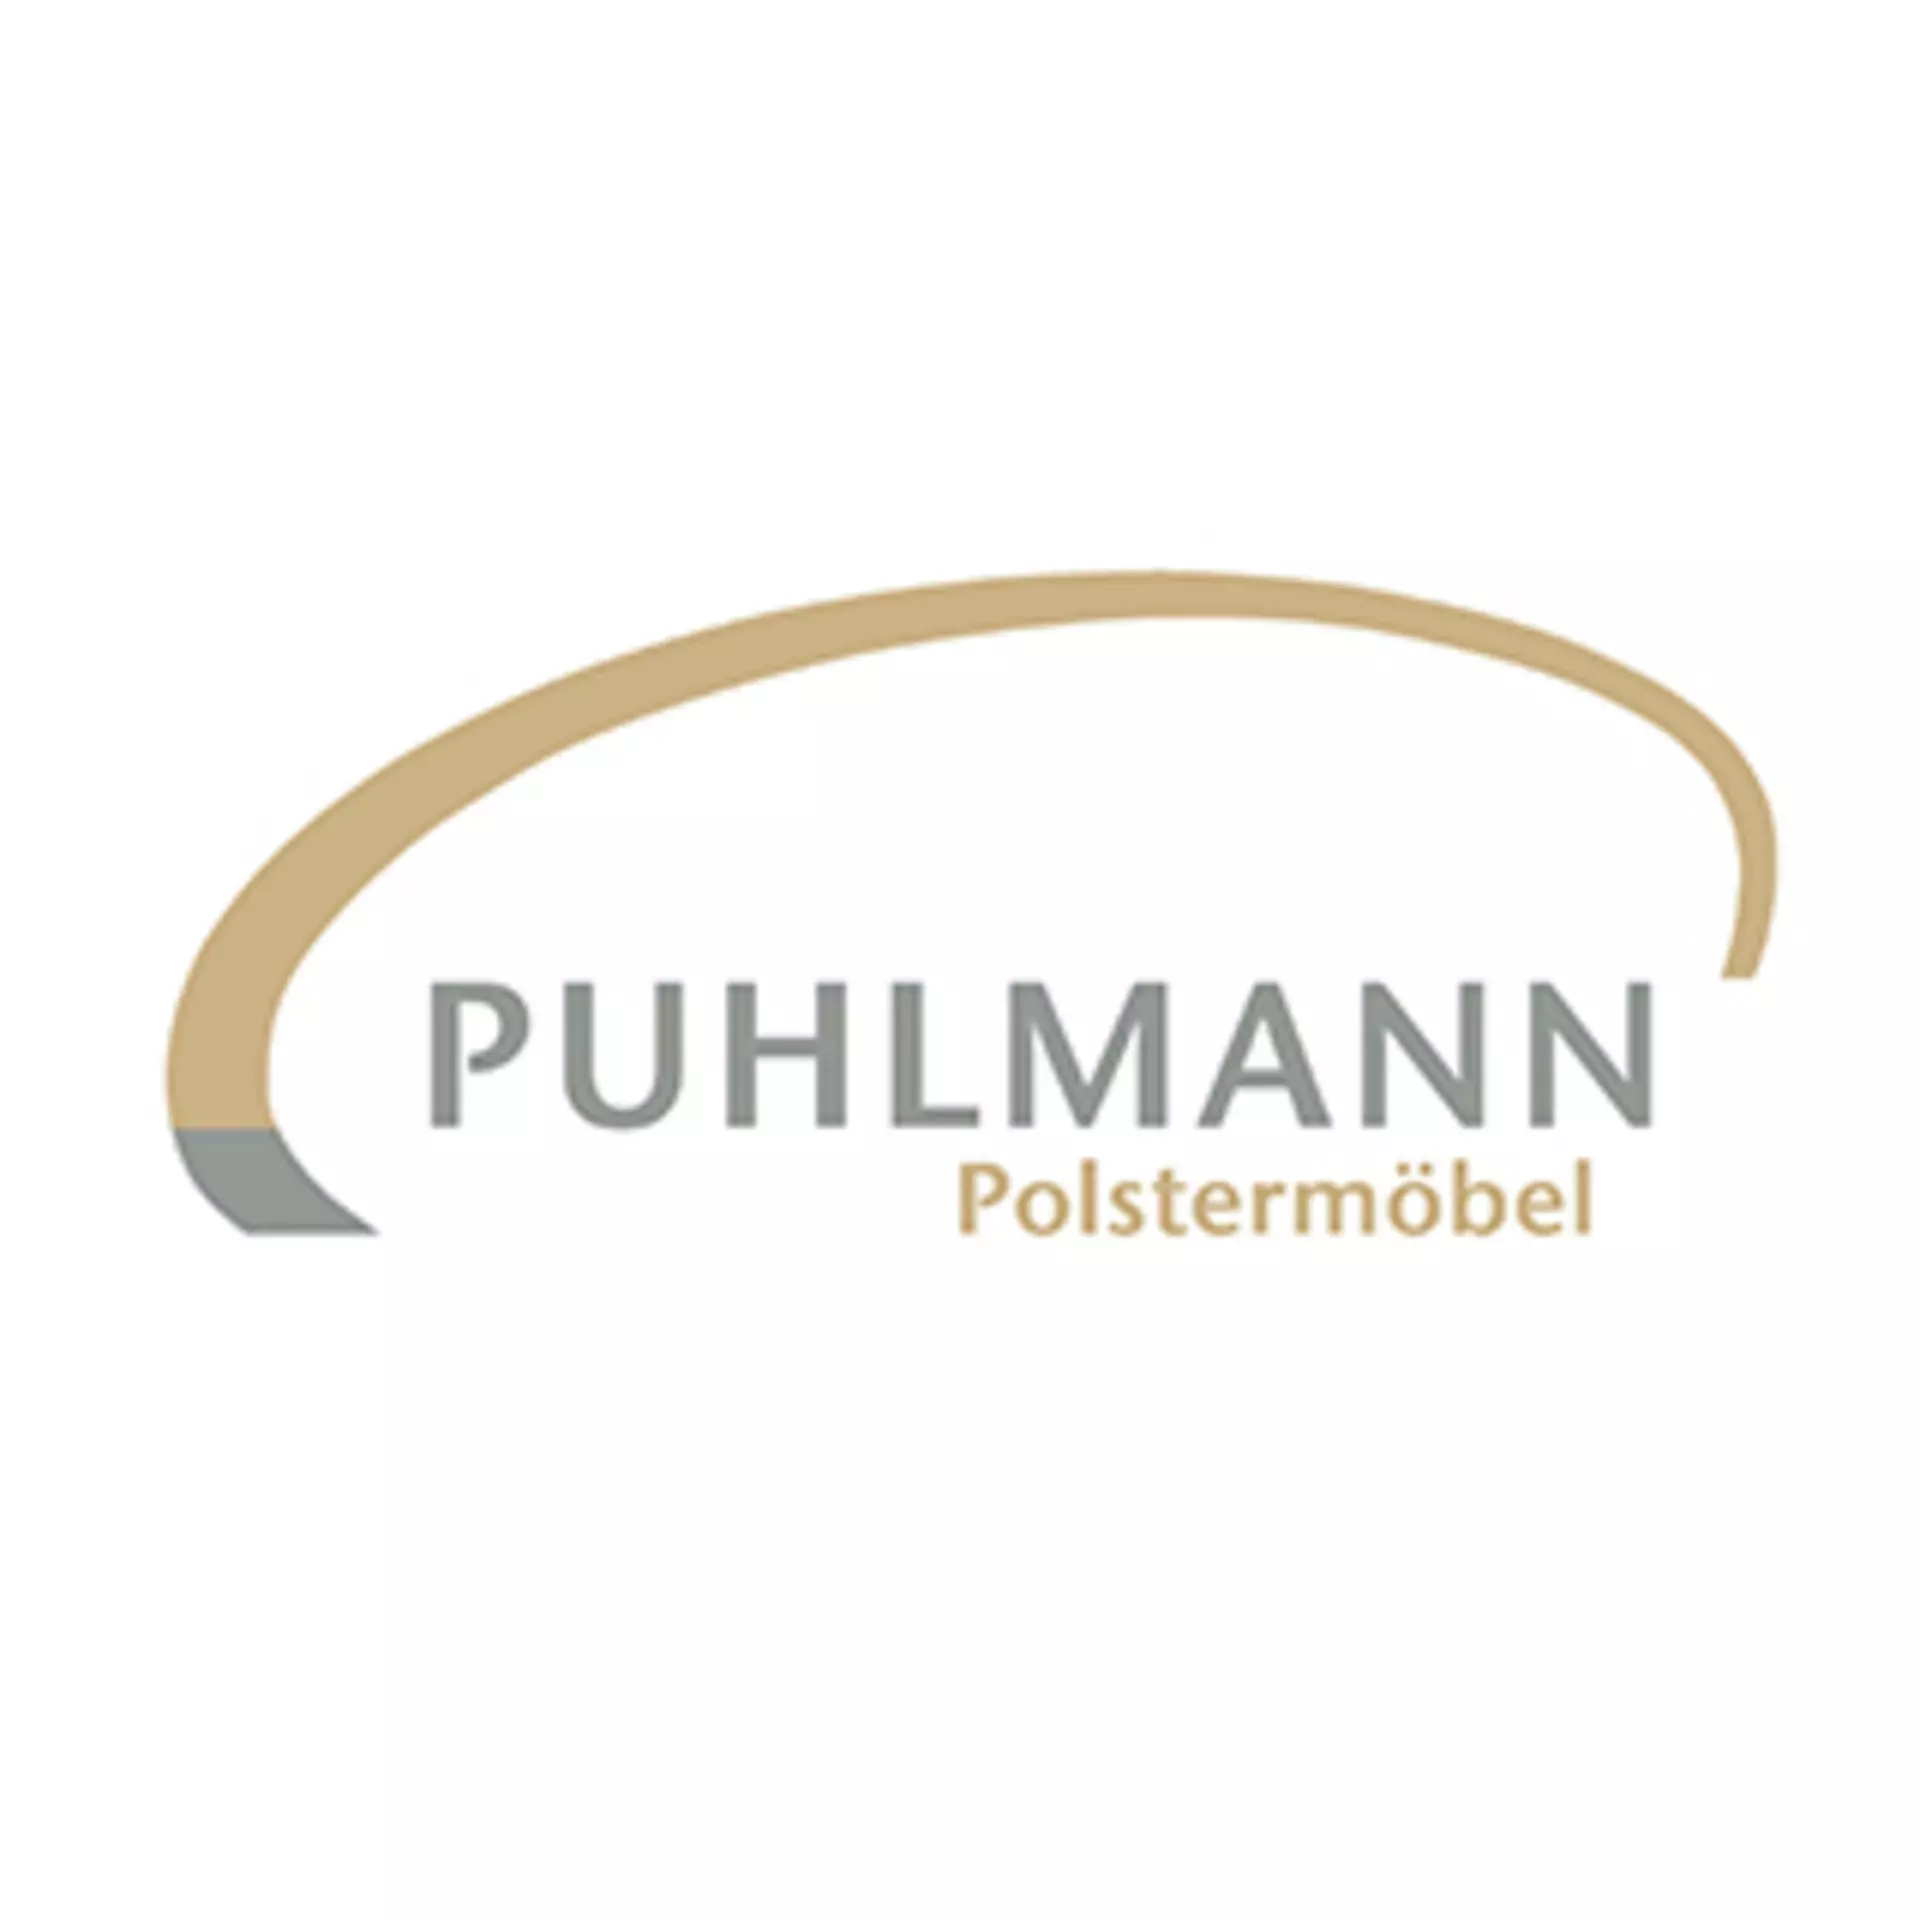 PUHLMANN-Polstermöbel Logo